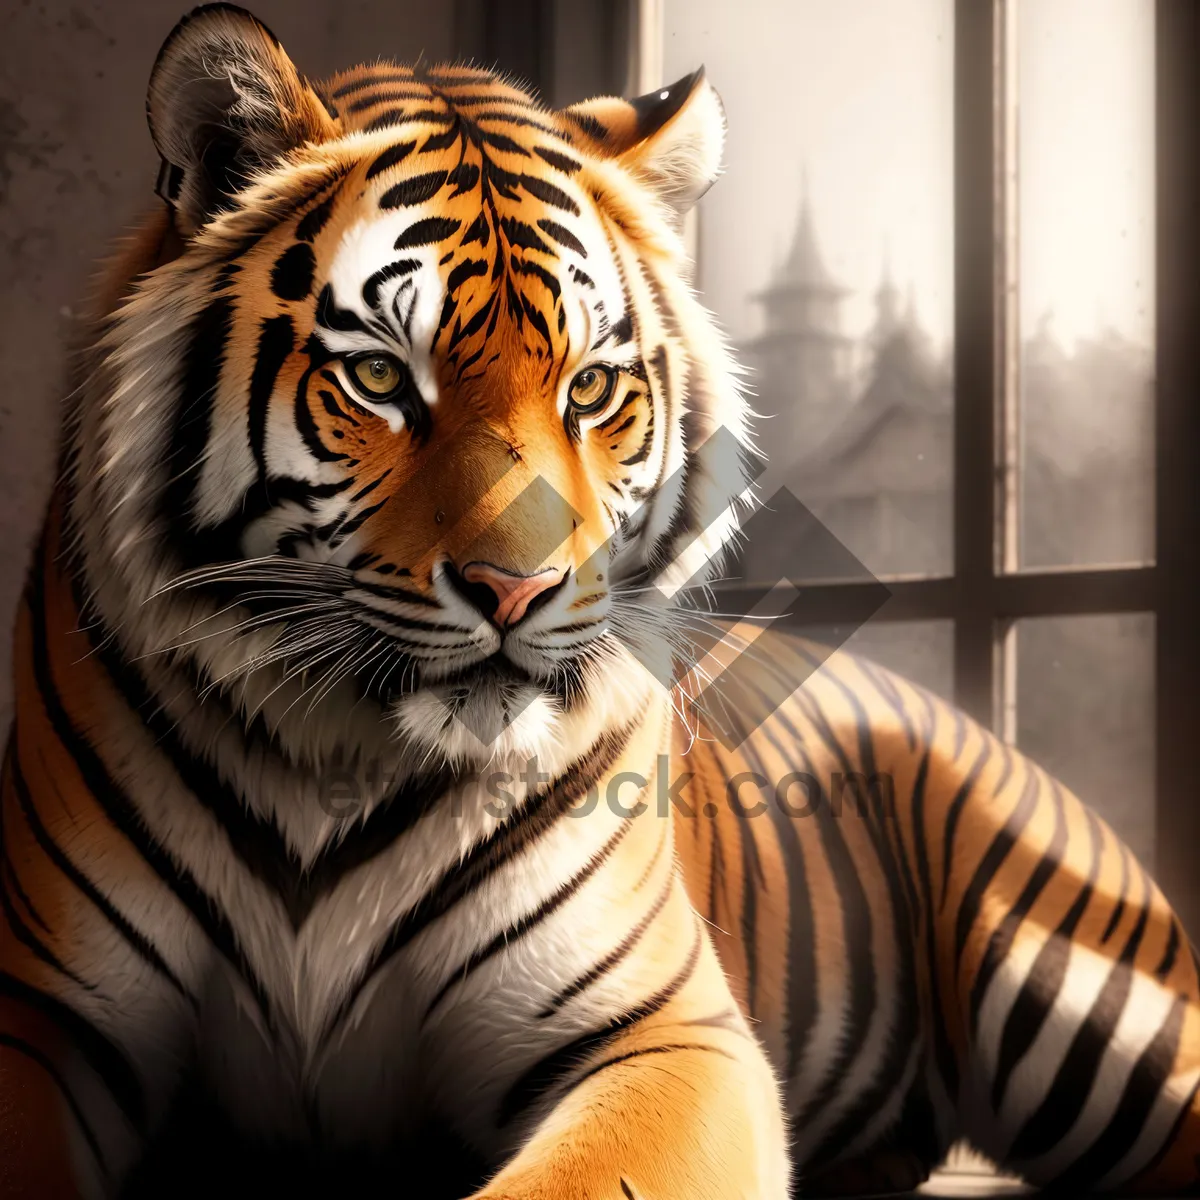 Picture of Fierce Jungle Predator: Striped Tigress in the Wild